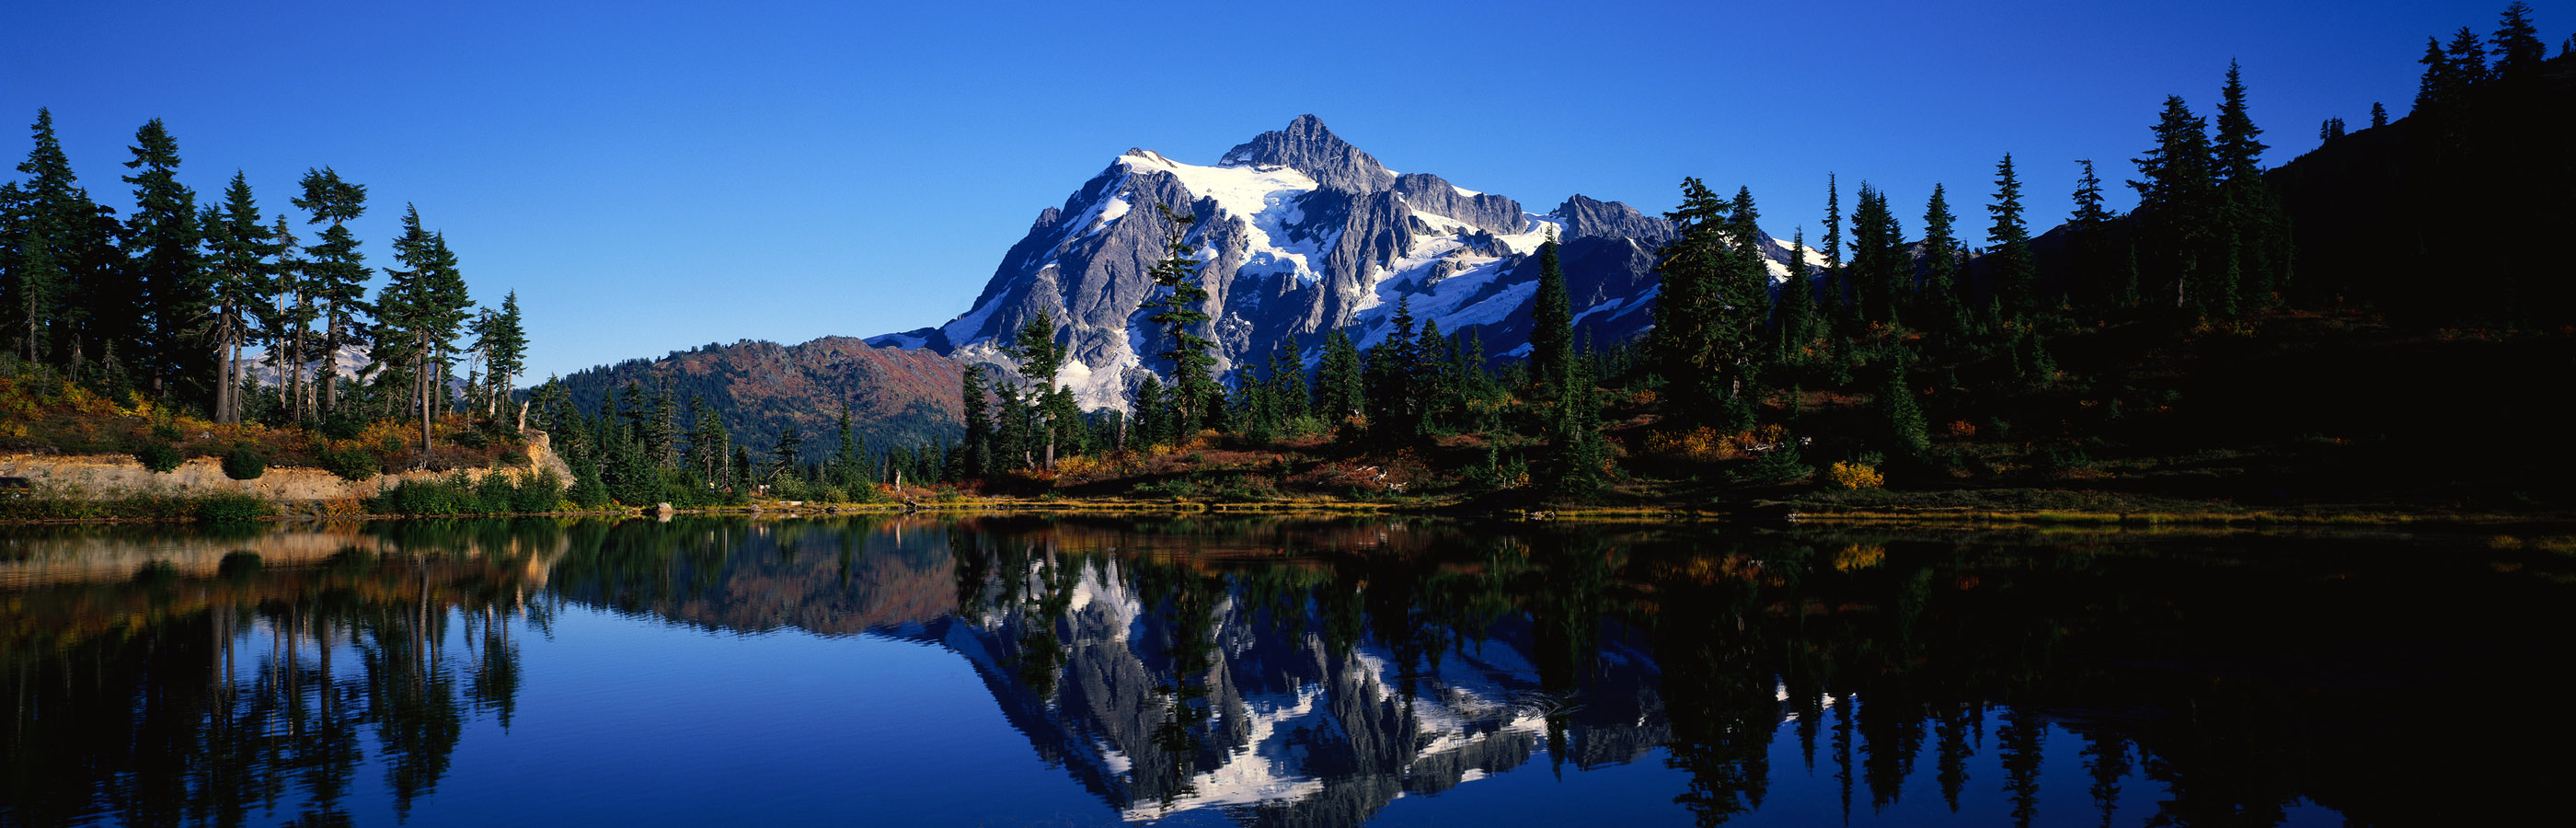 panoramic desktop wallpaper dual monitors,mountain,reflection,natural landscape,mountainous landforms,nature